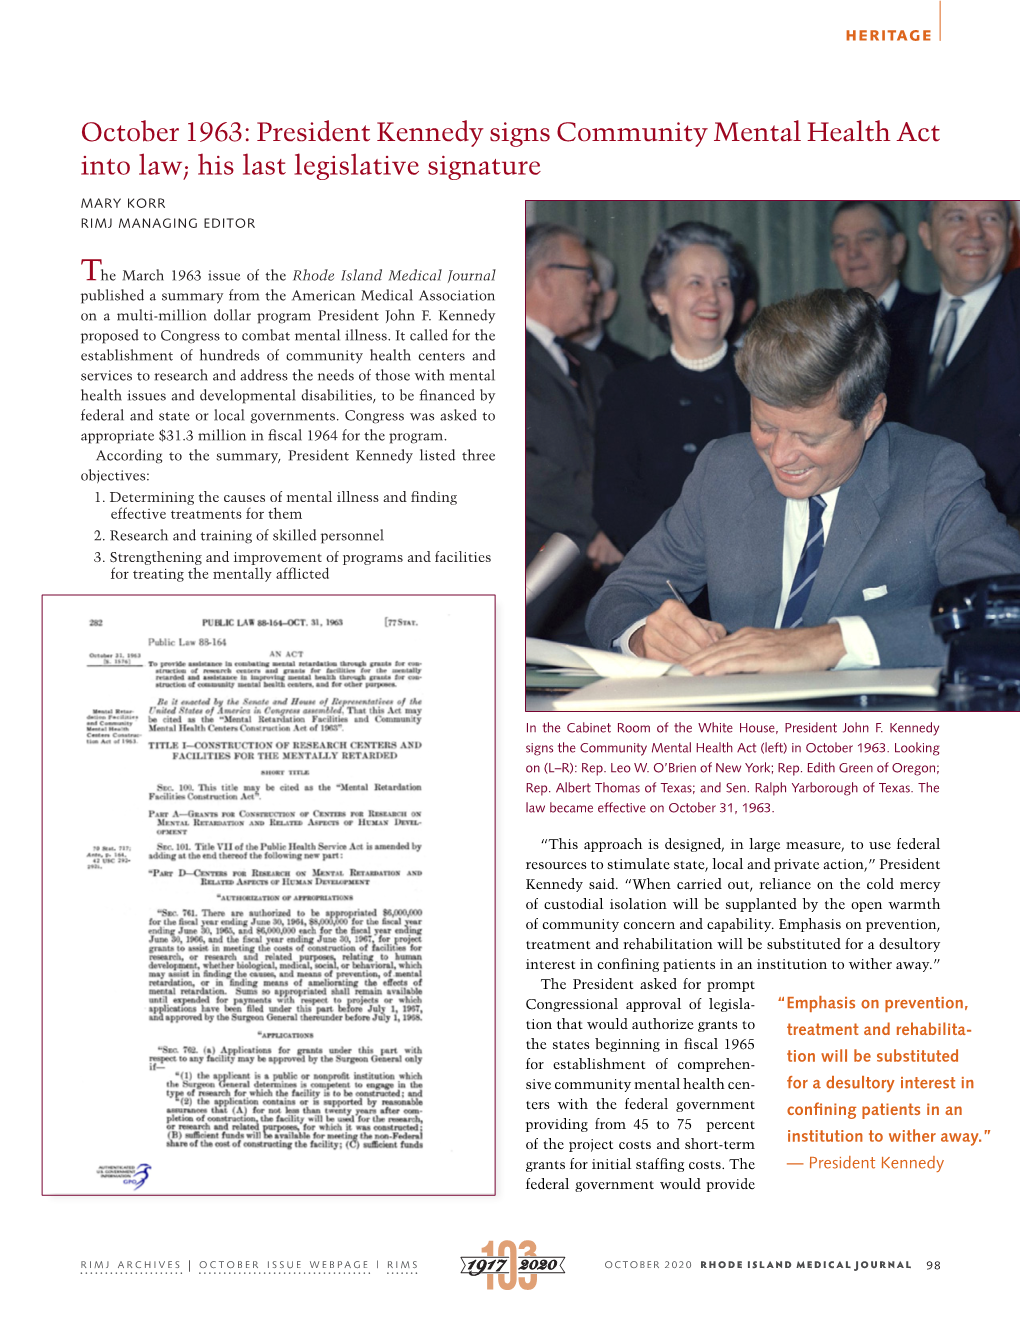 President Kennedy Signs Community Mental Health Act Into Law; His Last Legislative Signature